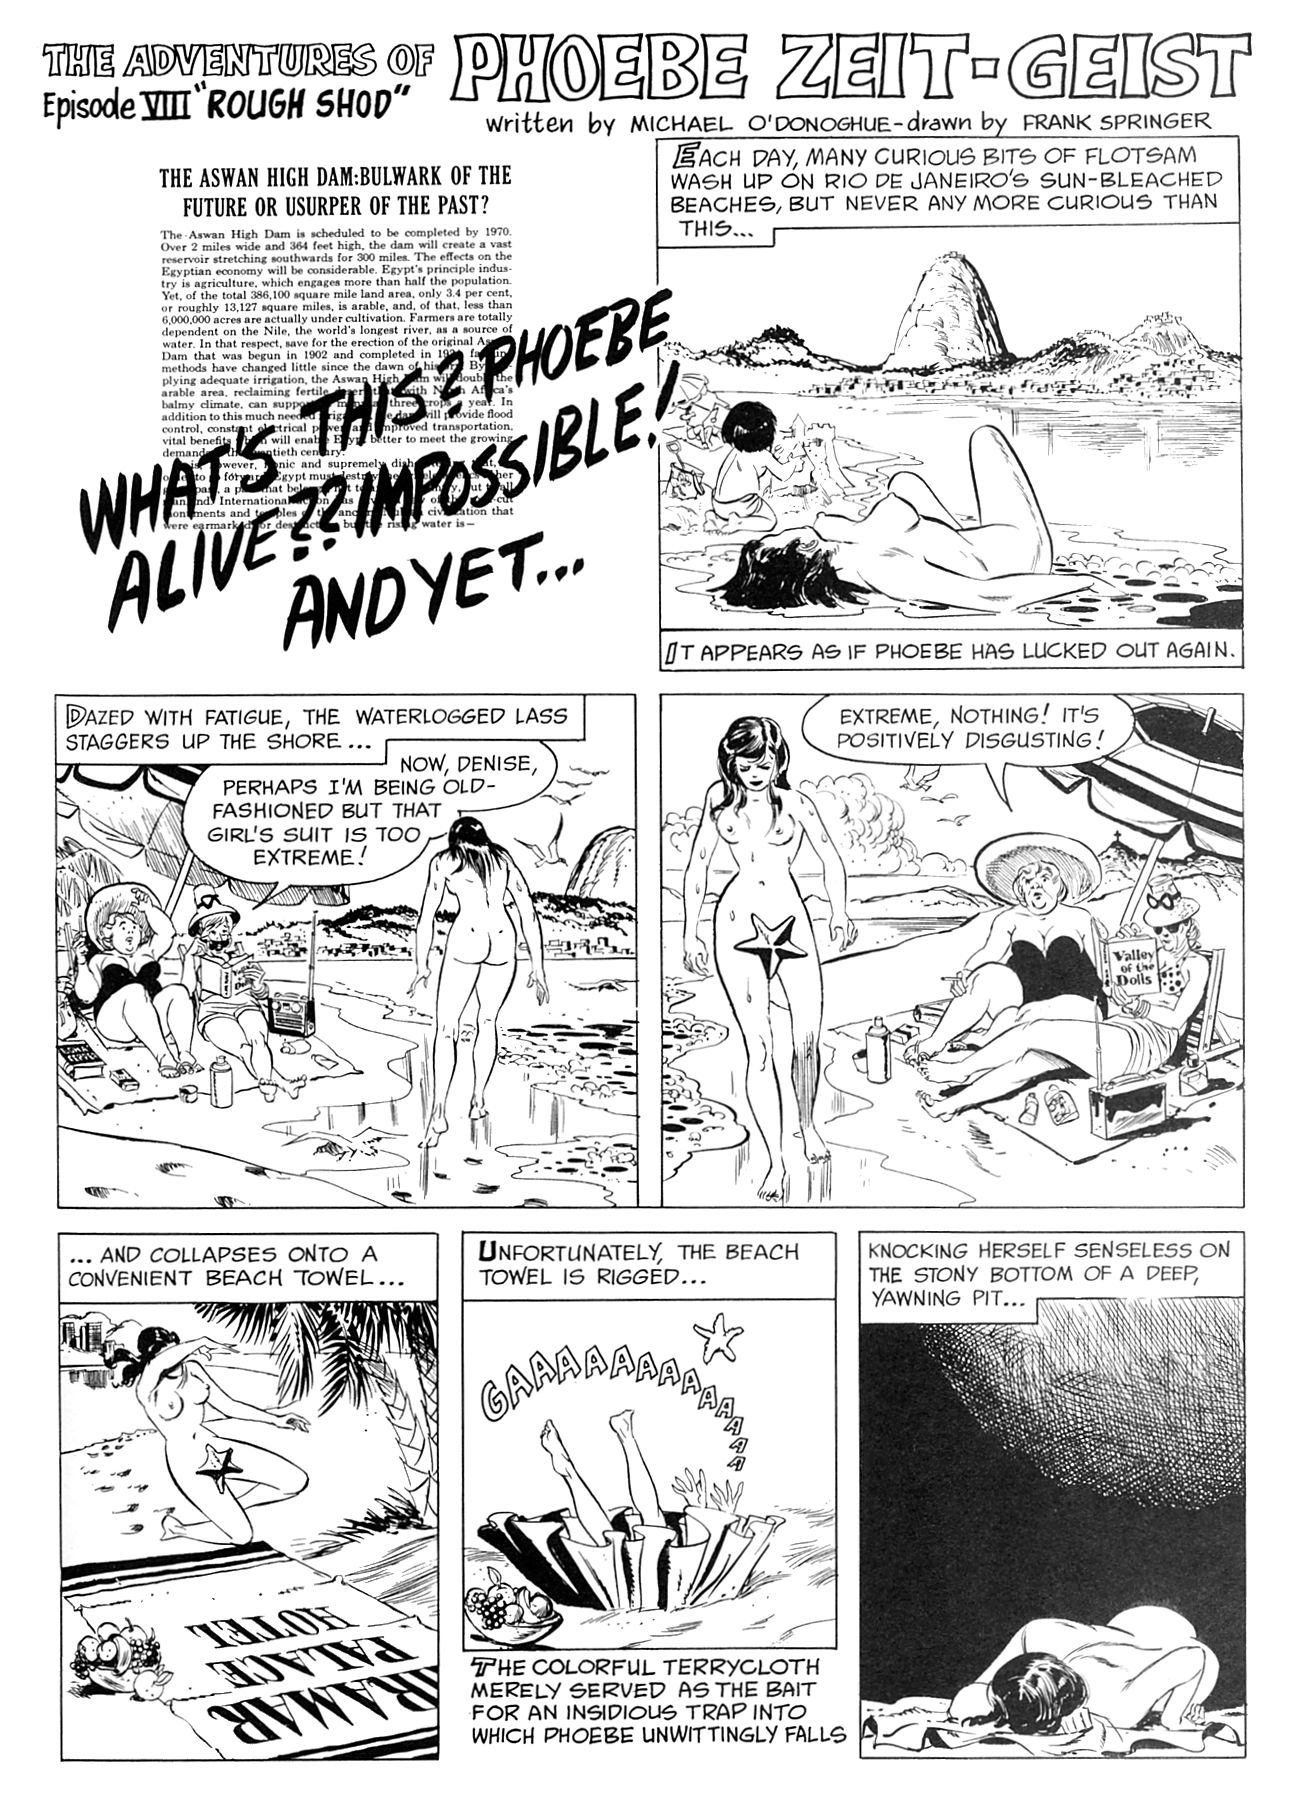 Read online The Adventures of Phoebe Zeit-Geist comic -  Issue # TPB - 53